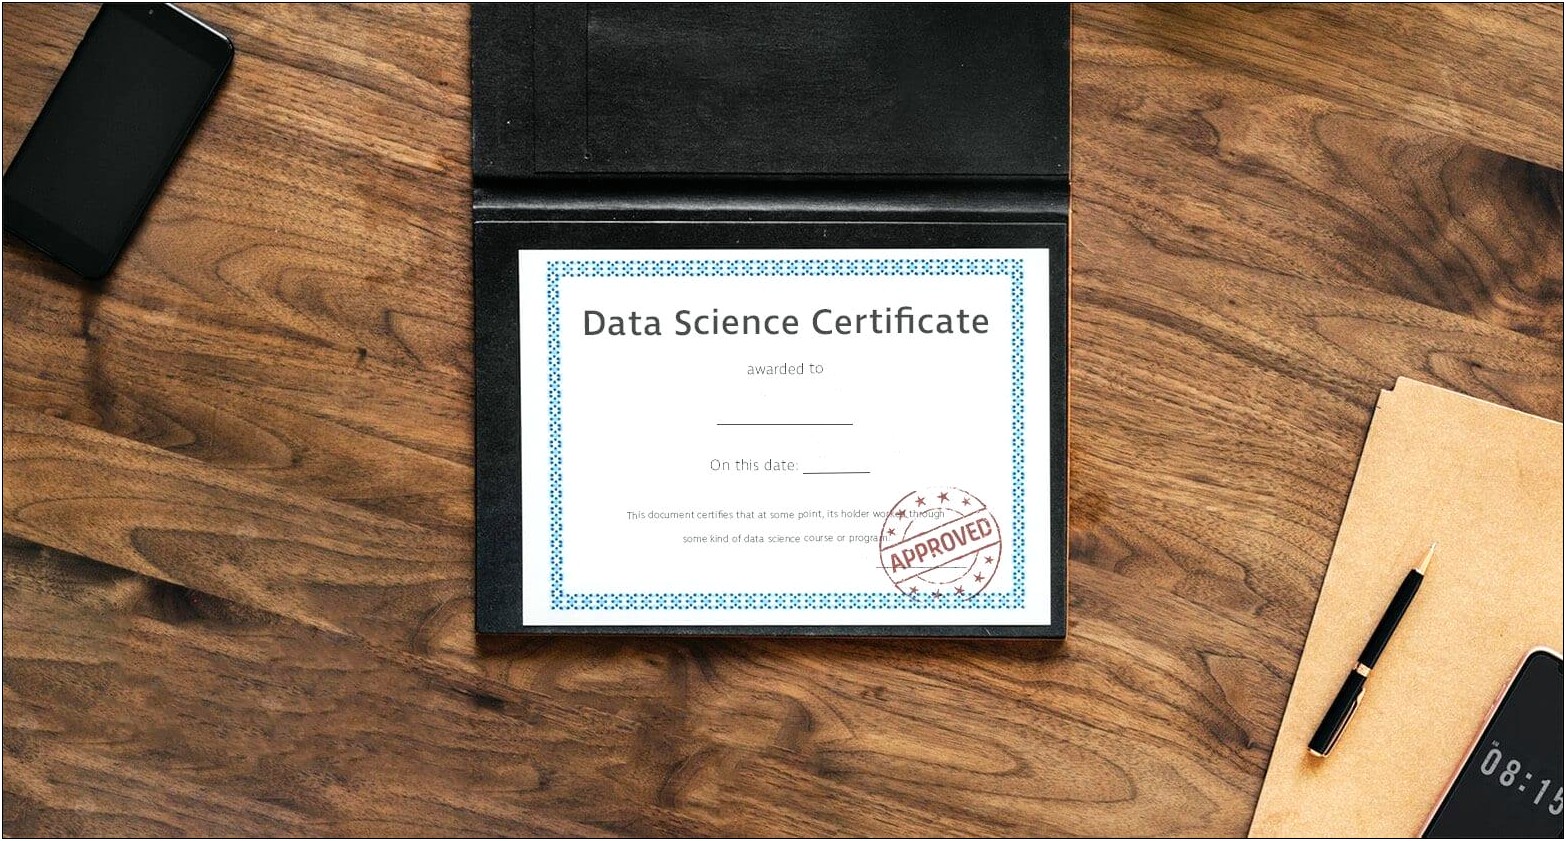 Data Science Certificate Microsoft Word Template